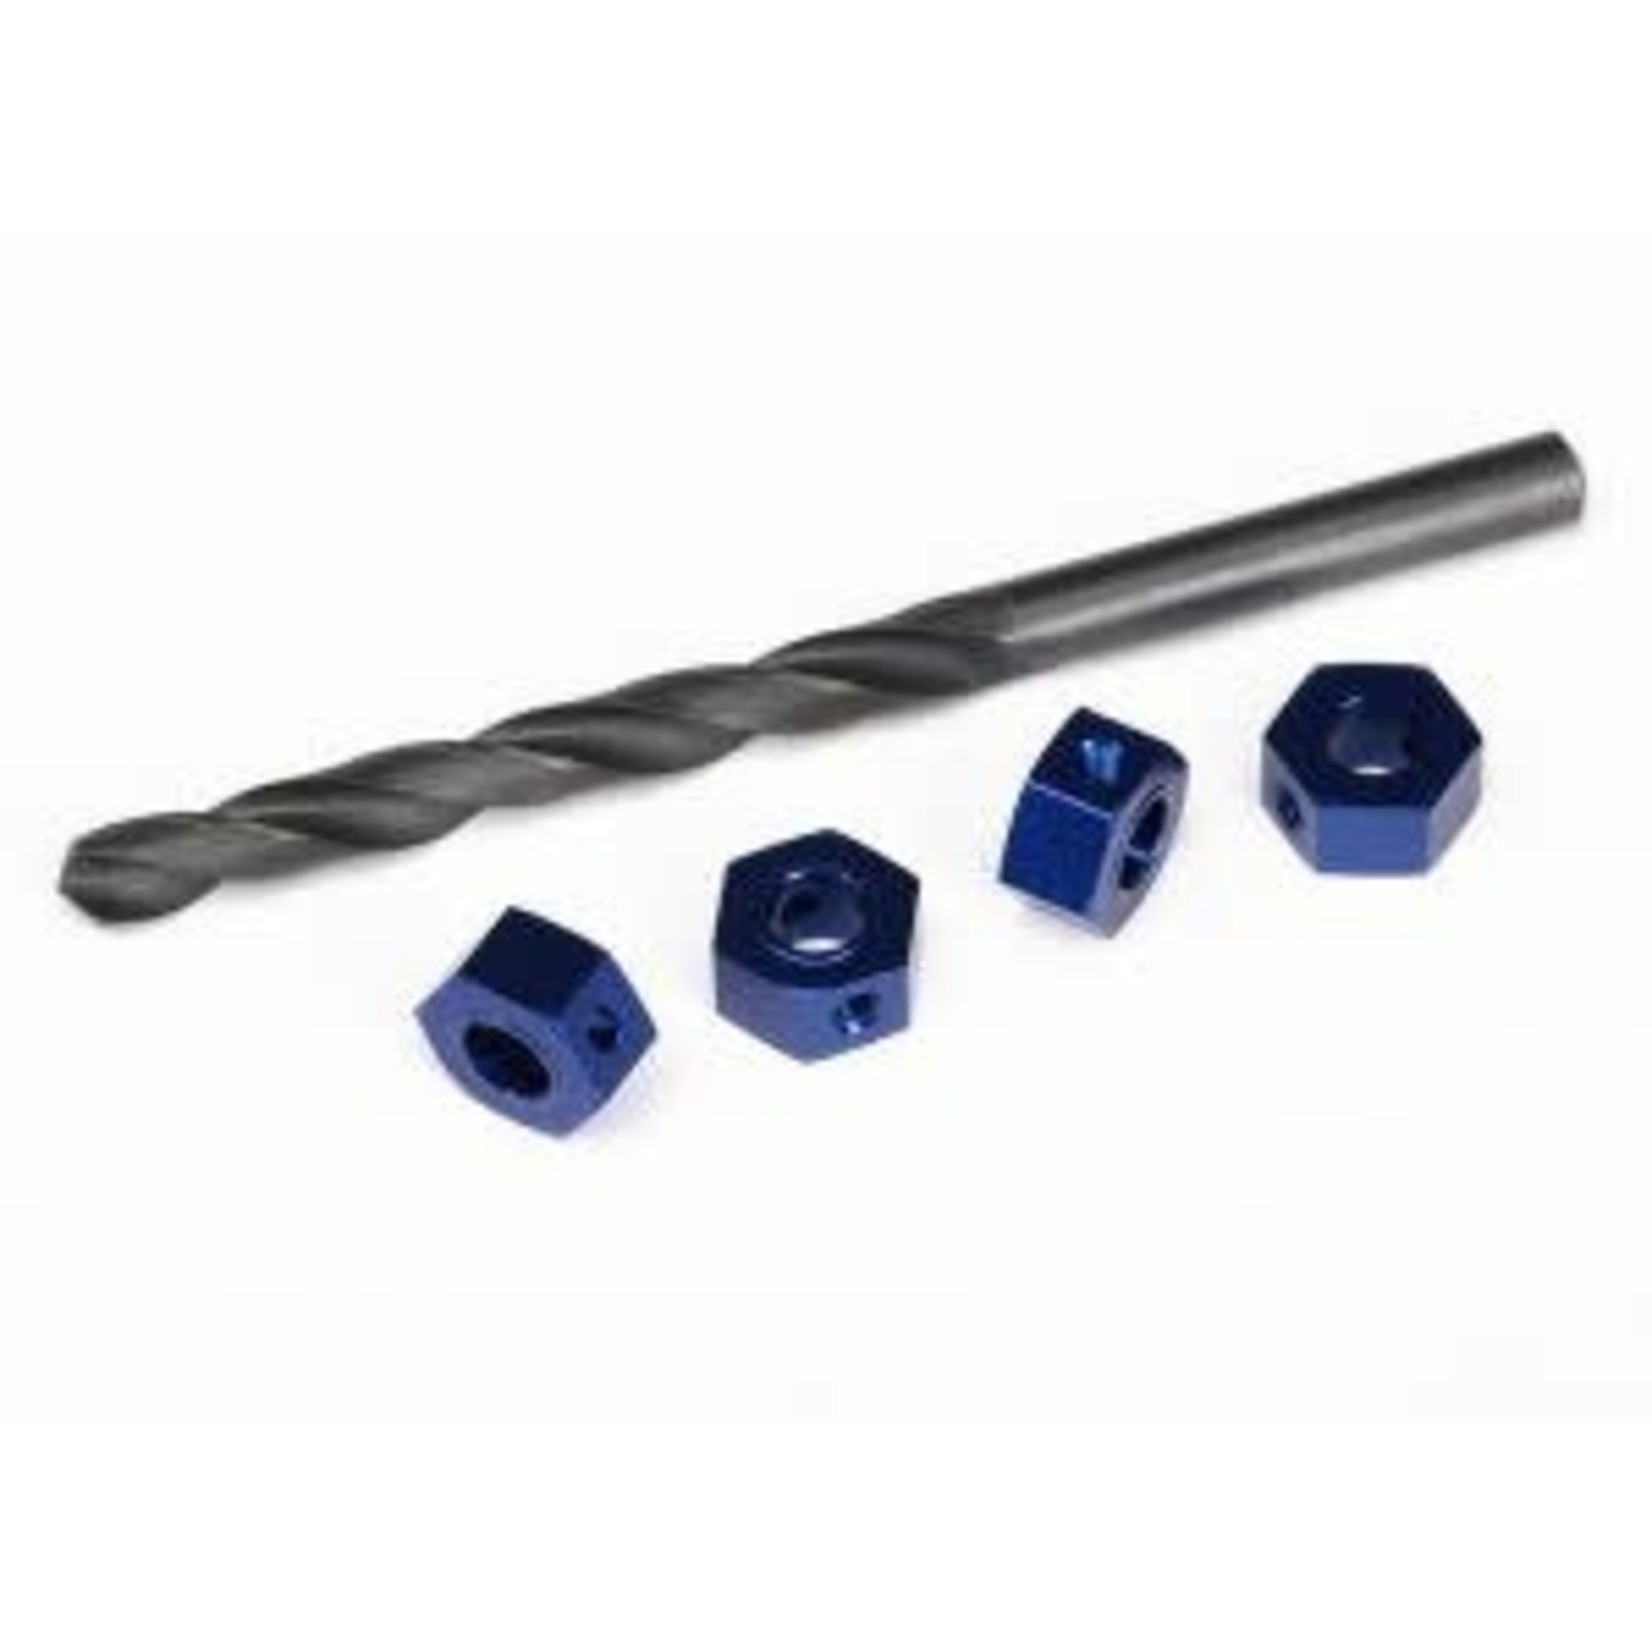 Traxxas 6869 Wheel adaptors, 12mm hex, 6061-T6 aluminum (blue-anodized) (4)/ screw pins (4)/ drill bit, 0.25 inch (for 6mm shafts) (requires #6451 (x2), #6452 (x2), #6439, #6455, #5117 (x3))